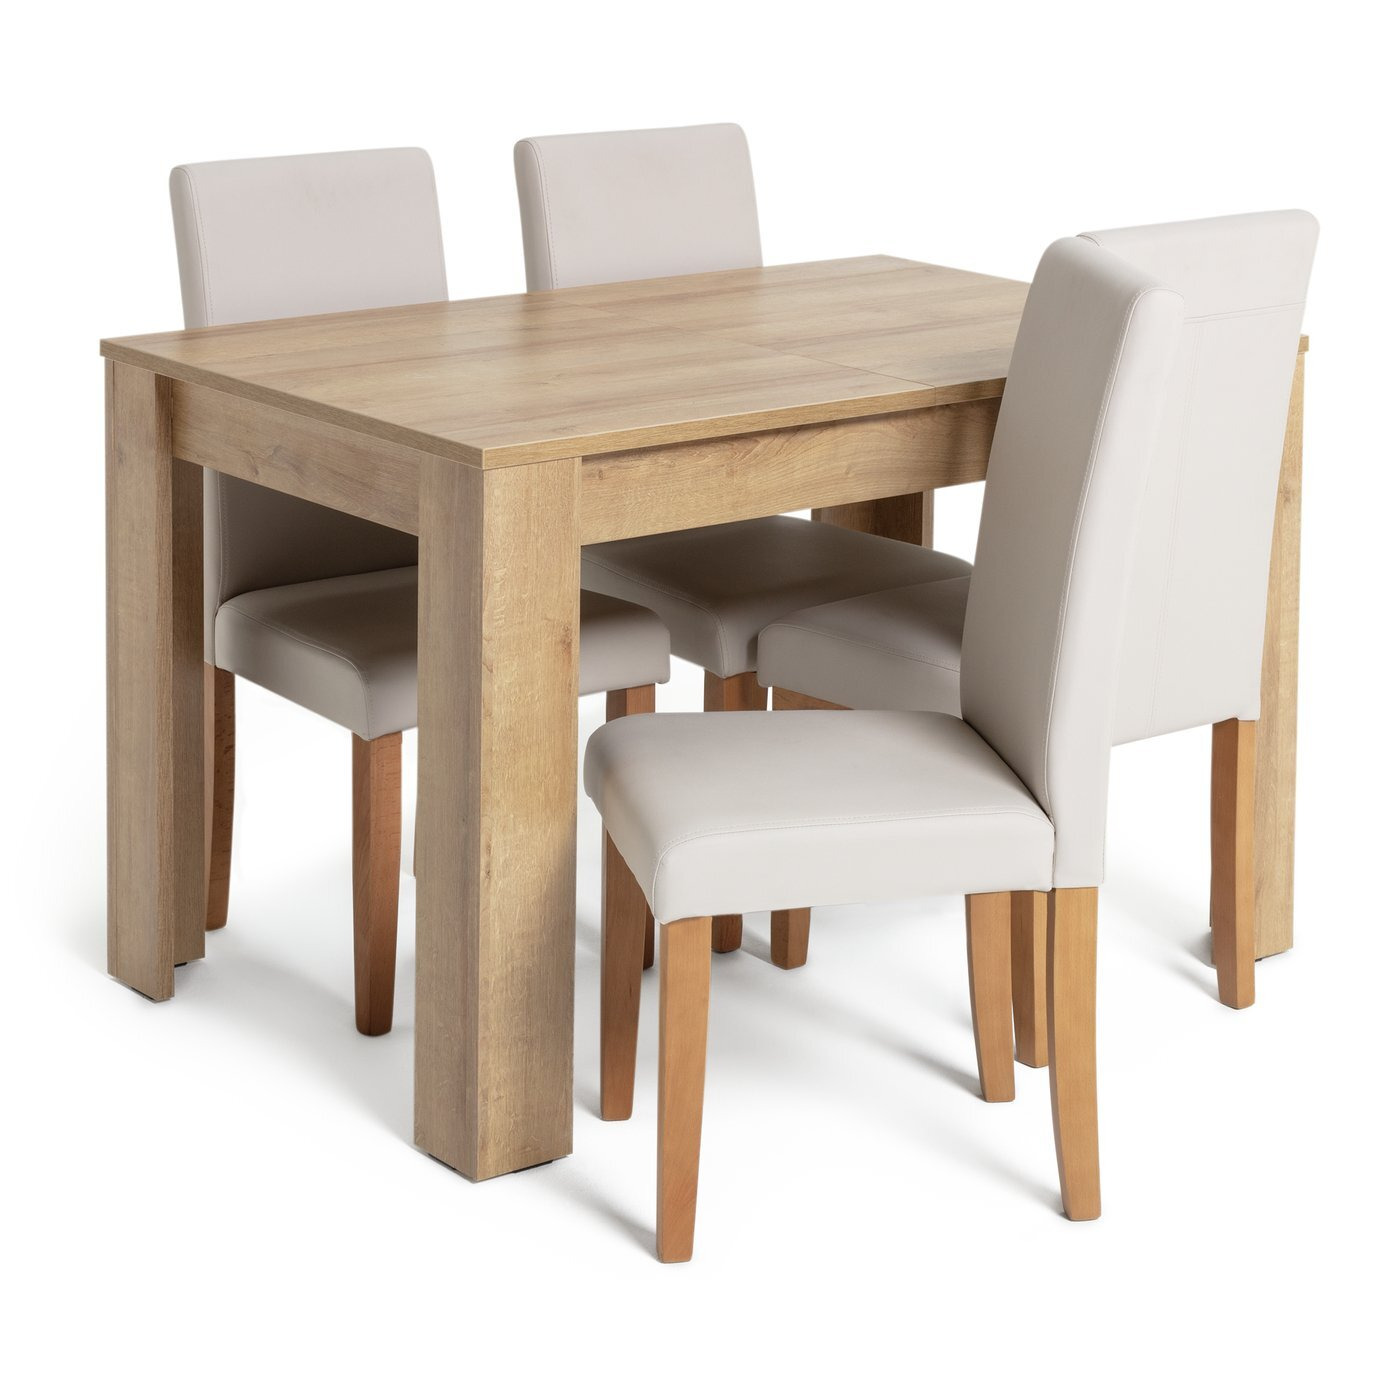 Argos Home Miami Oak Effect Extending Table & 4 Cream Chairs - image 1